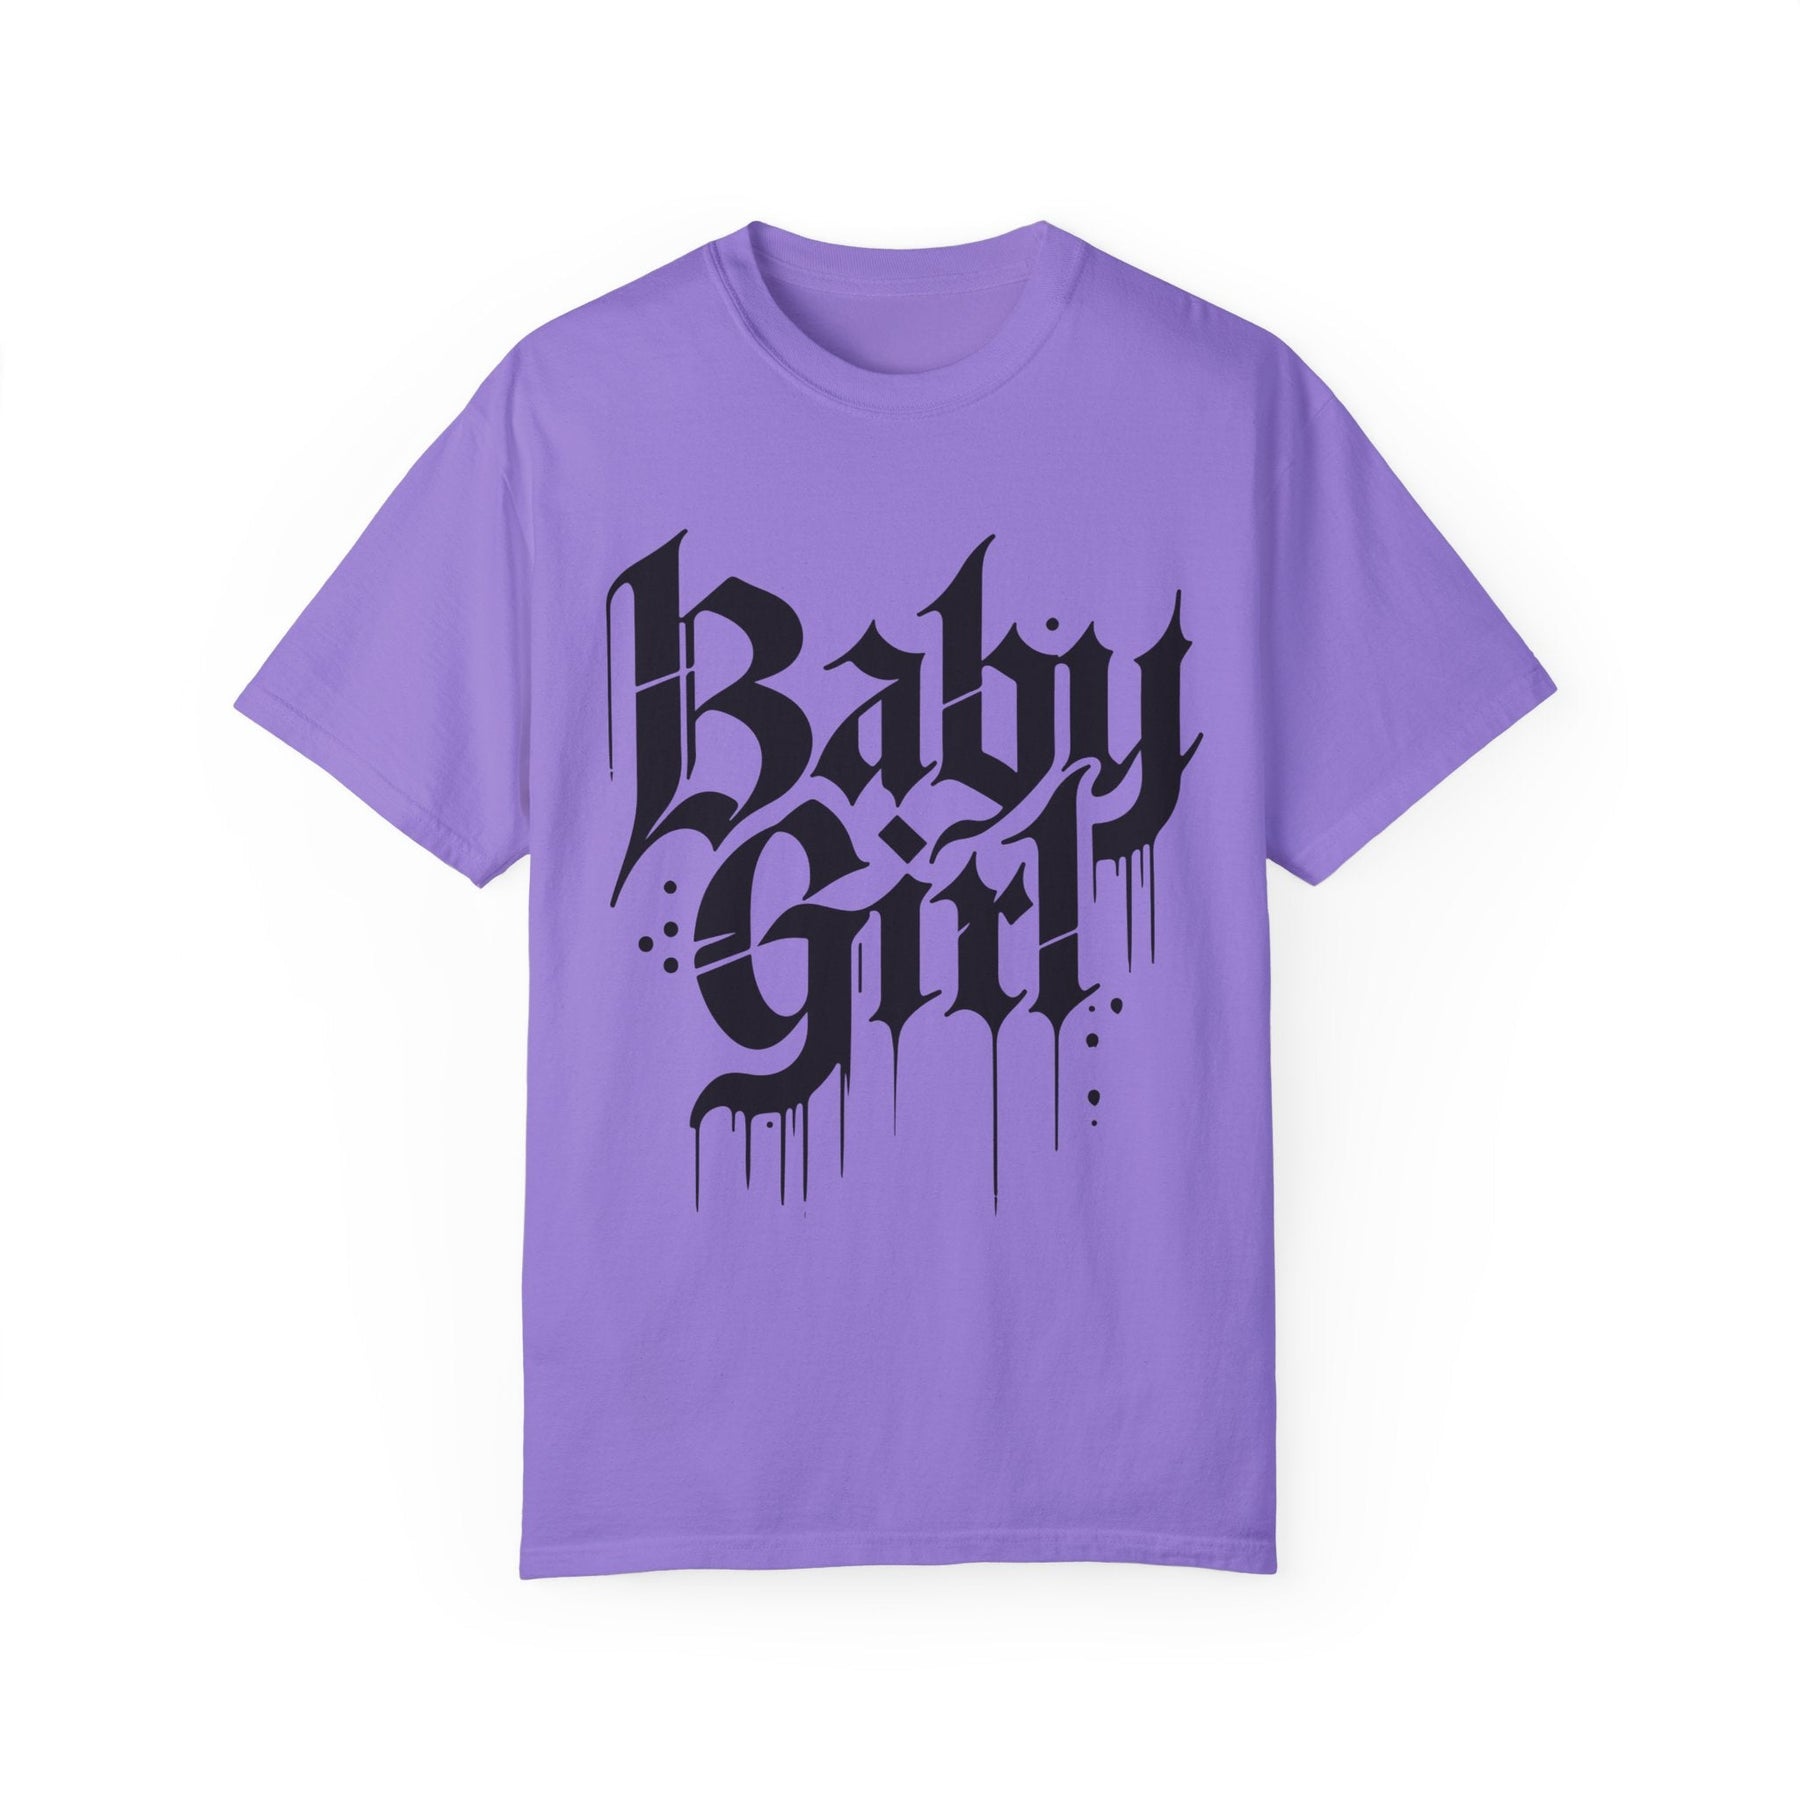 Baby Girl Comfort Tee - Goth Cloth Co.T - Shirt12788365809758129658